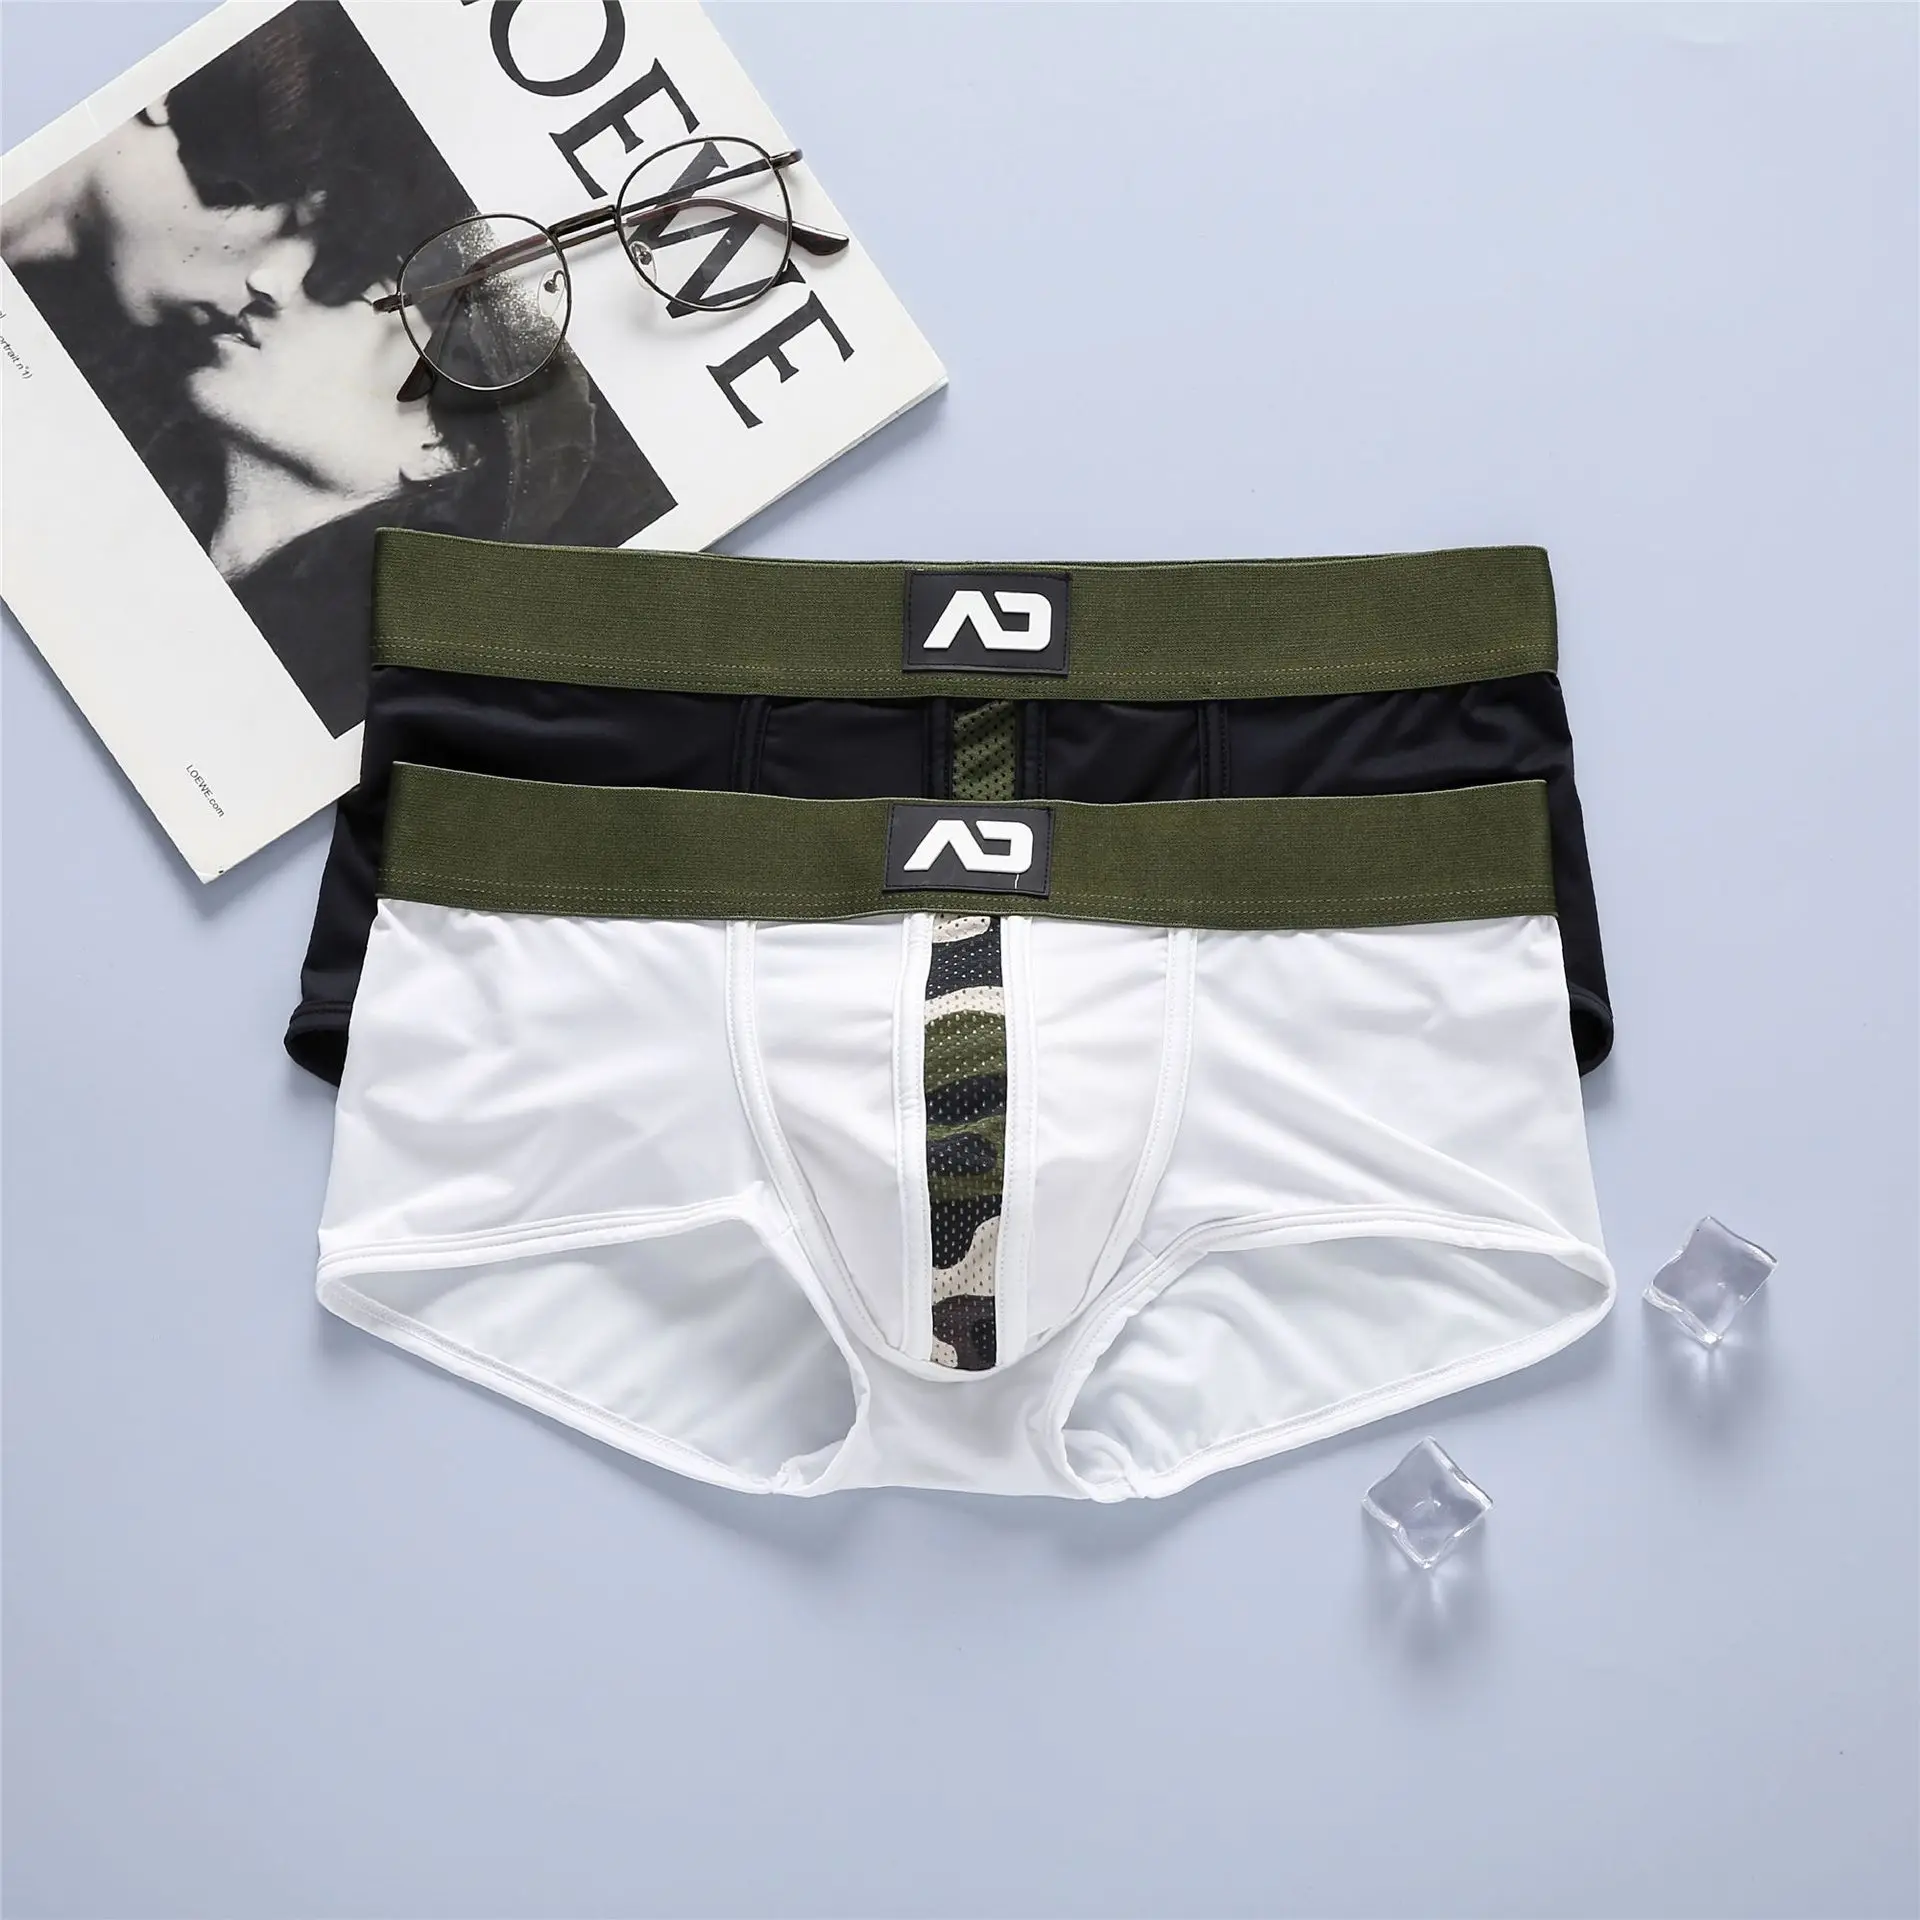 Underwear Men Sexy Boxer Briefs Interior Hombre Lingerie Gift for A Man Underpants Panties Boxershorts Fashion Minimalism Boxer